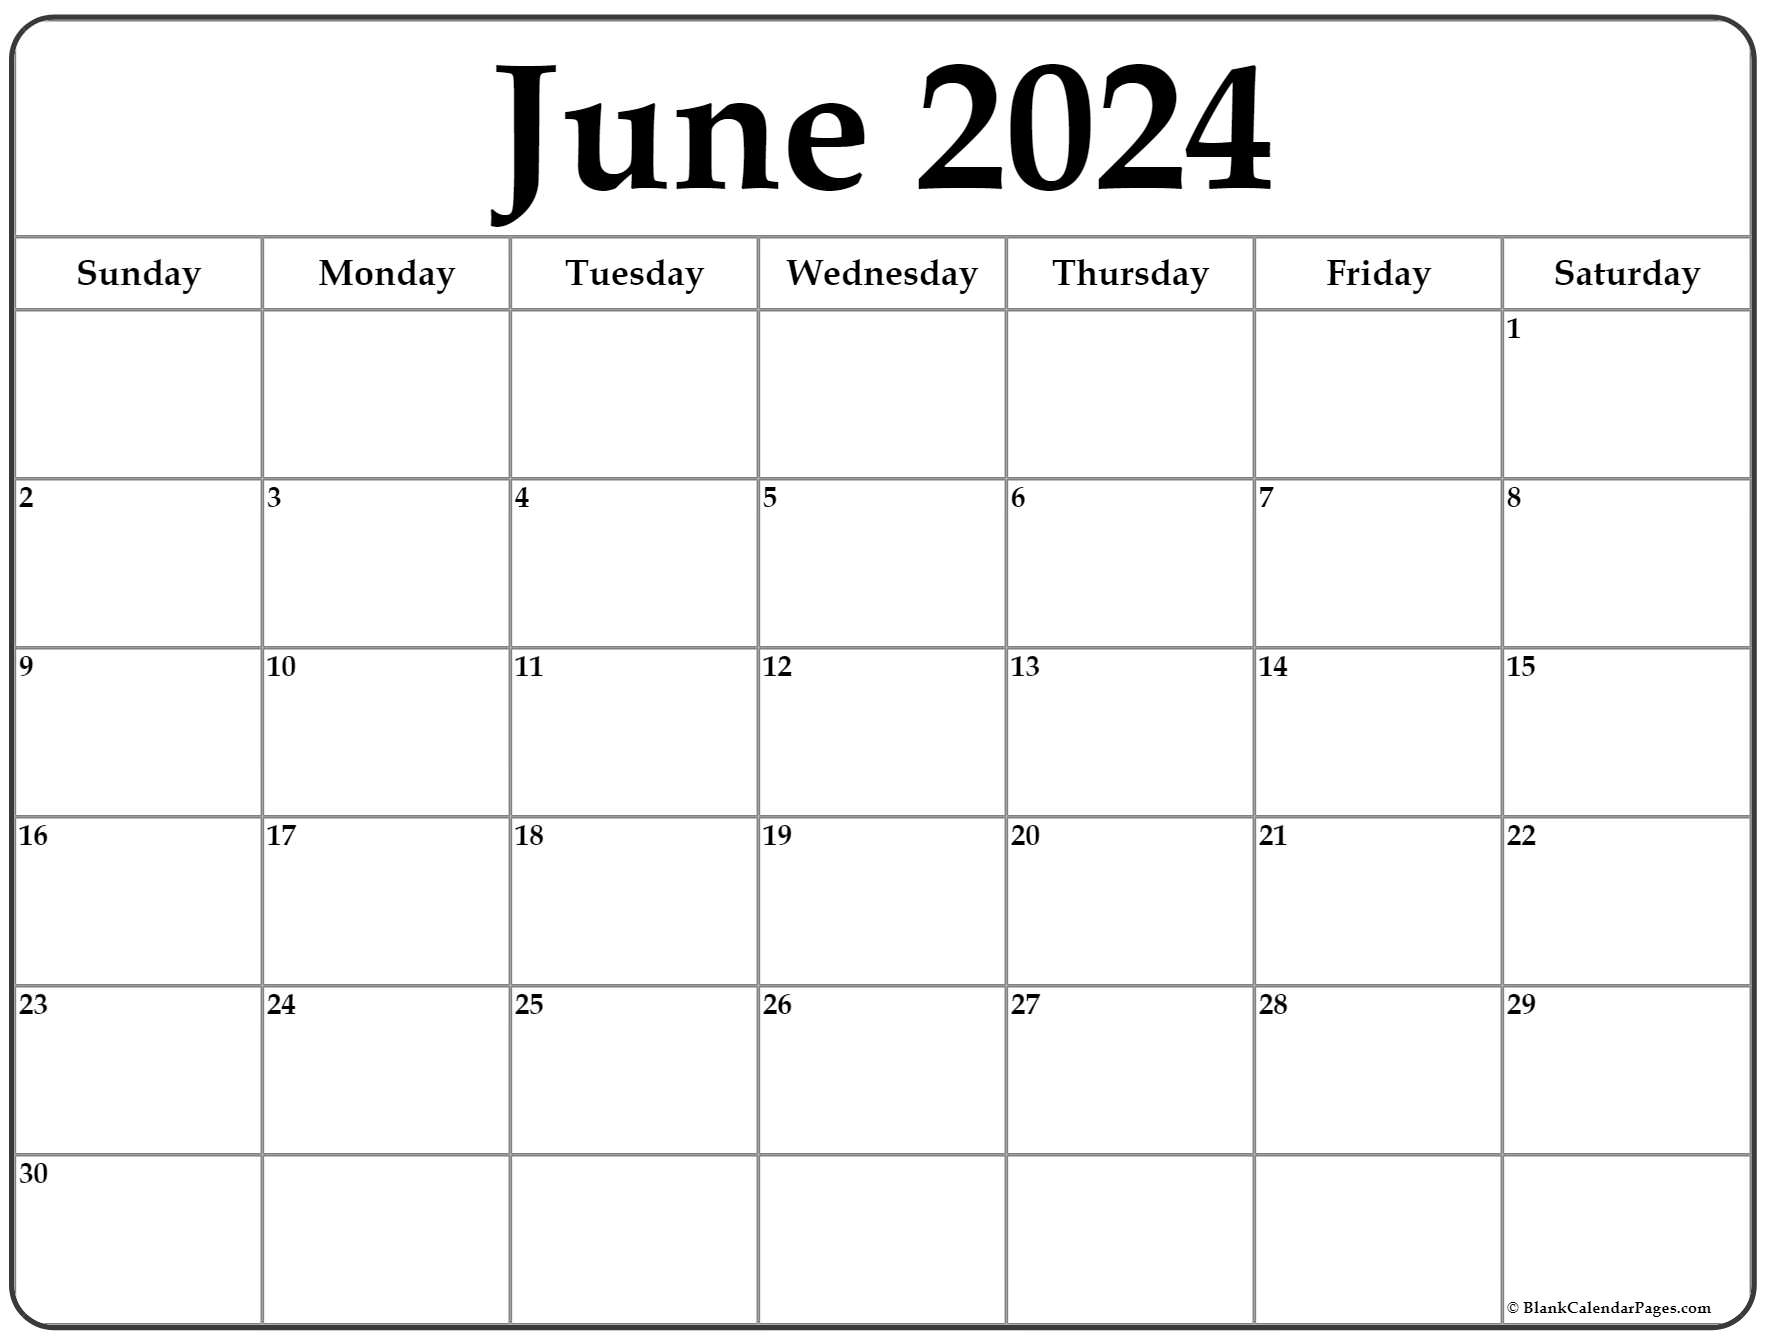 Free Calendar June 2022 June 2022 Calendar | Free Printable Calendar Templates